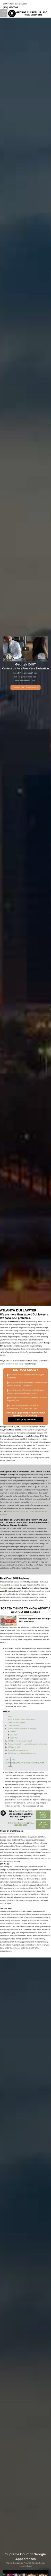 George C. Creal Jr. PC, Trial Lawyers - Atlanta GA Lawyers